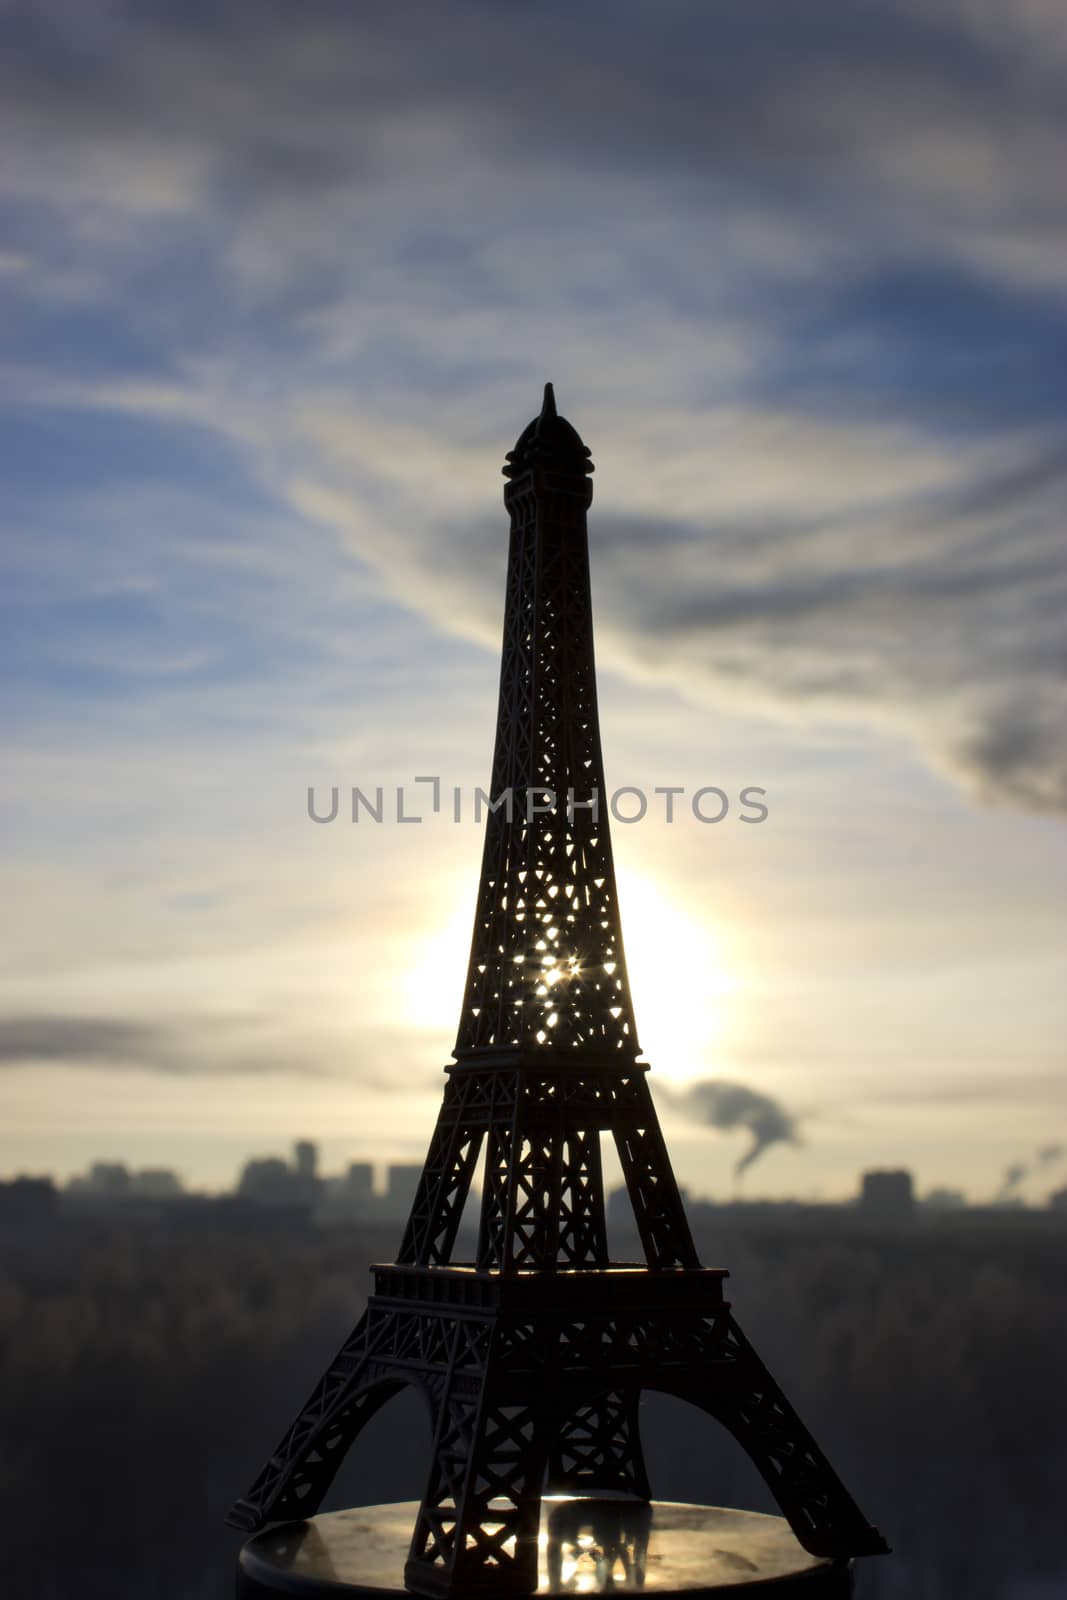 miniature of  Eiffel Tower placed in winter landscape